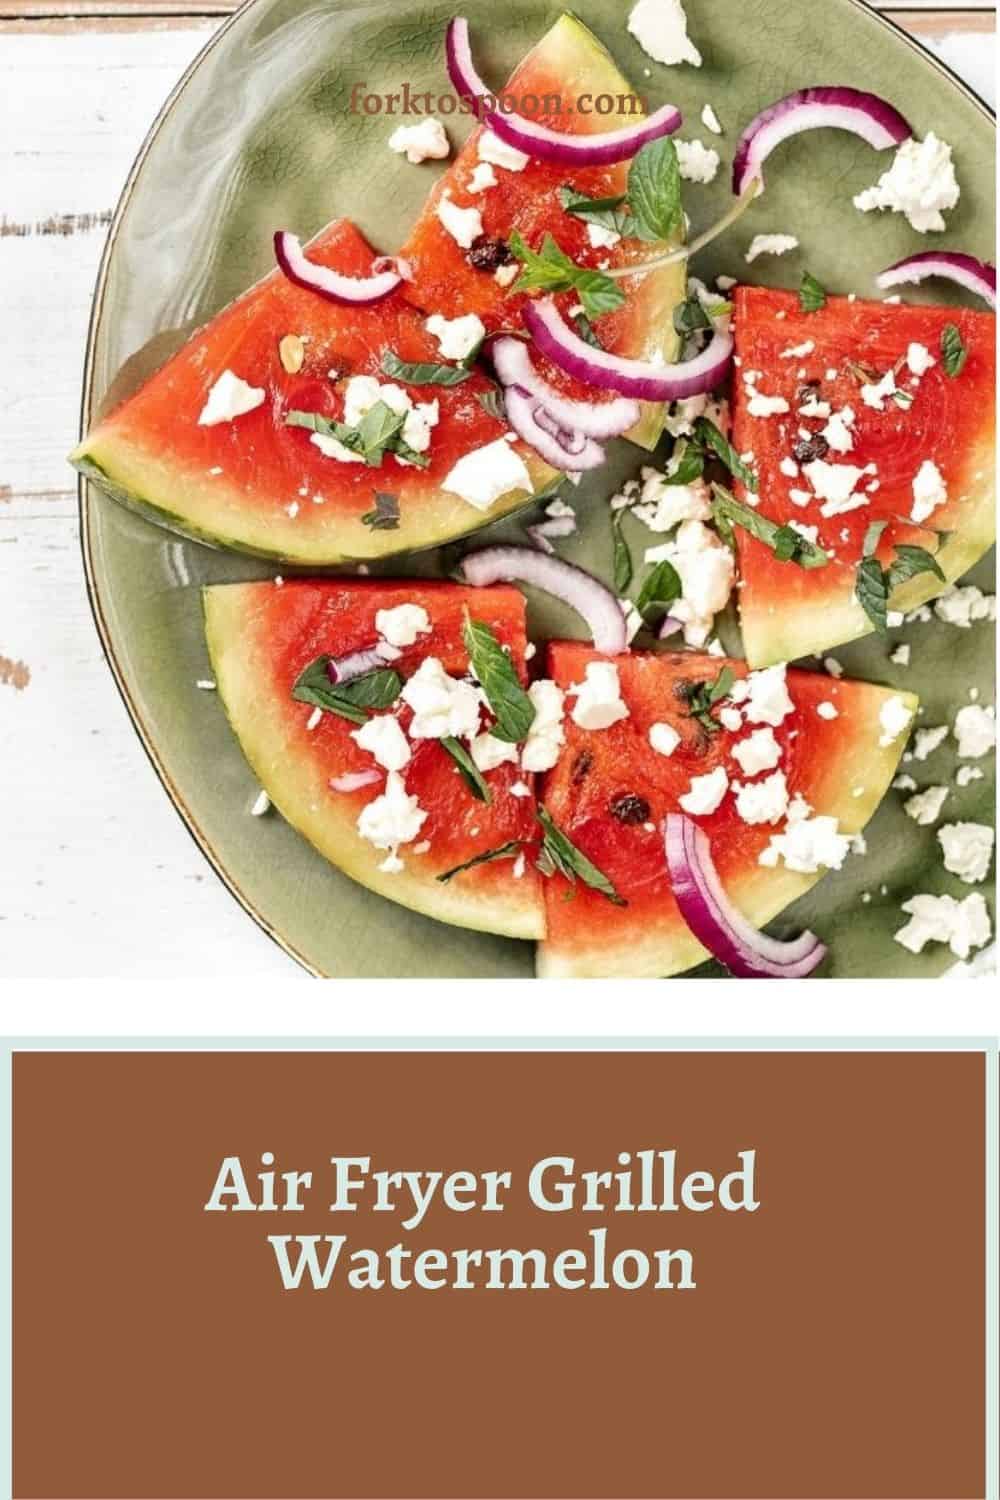 Air Fryer Grilled Watermelon